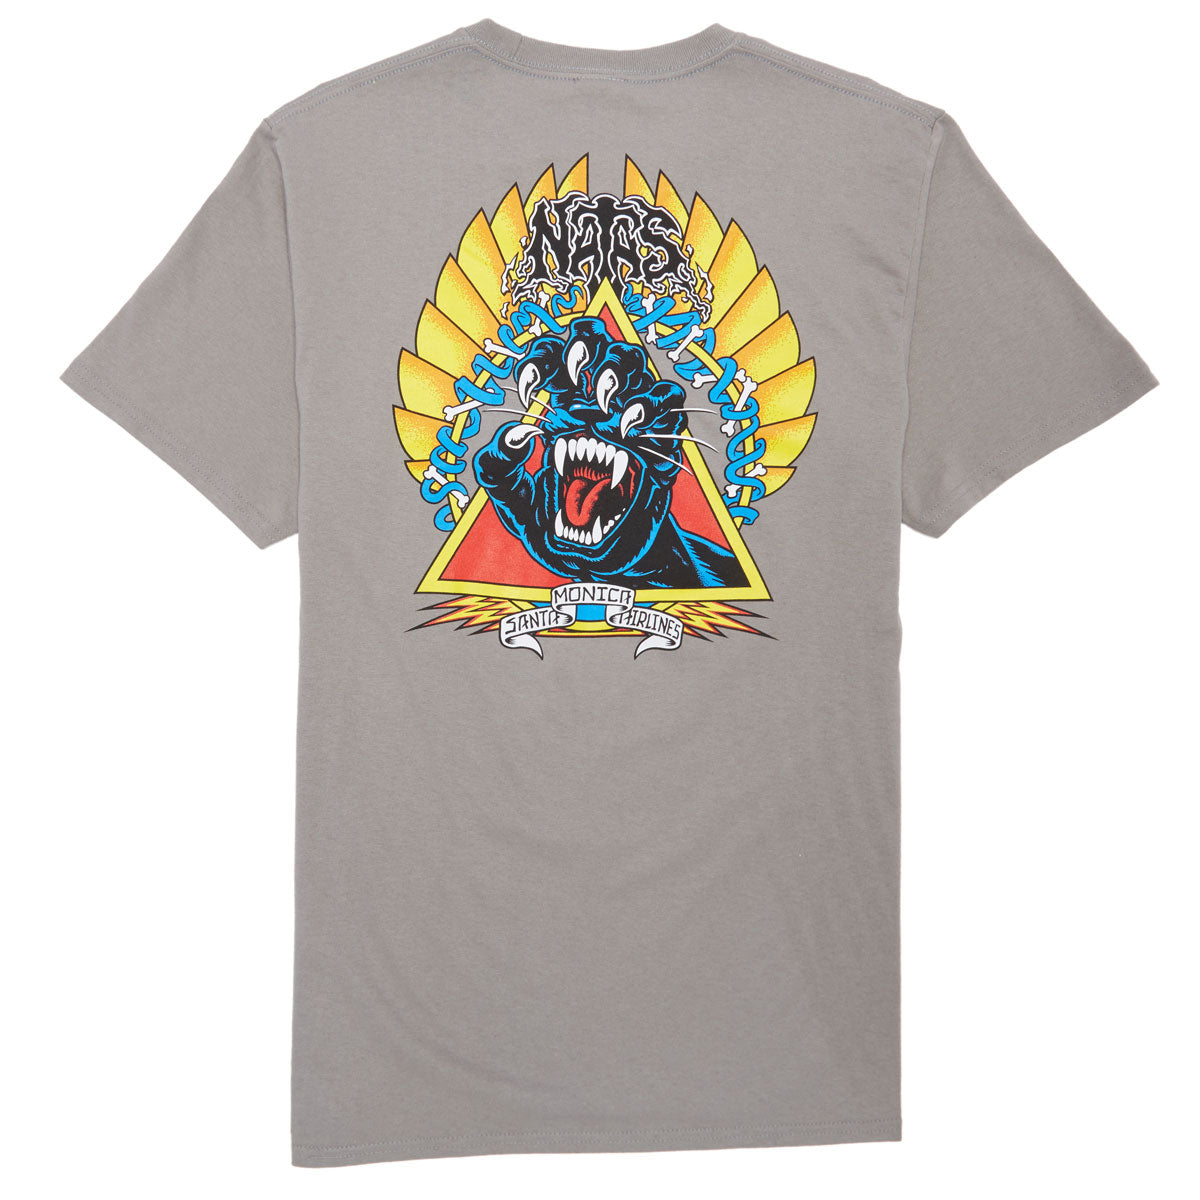 Santa Cruz Natas Screaming Panther T-Shirt - Medium Grey image 1